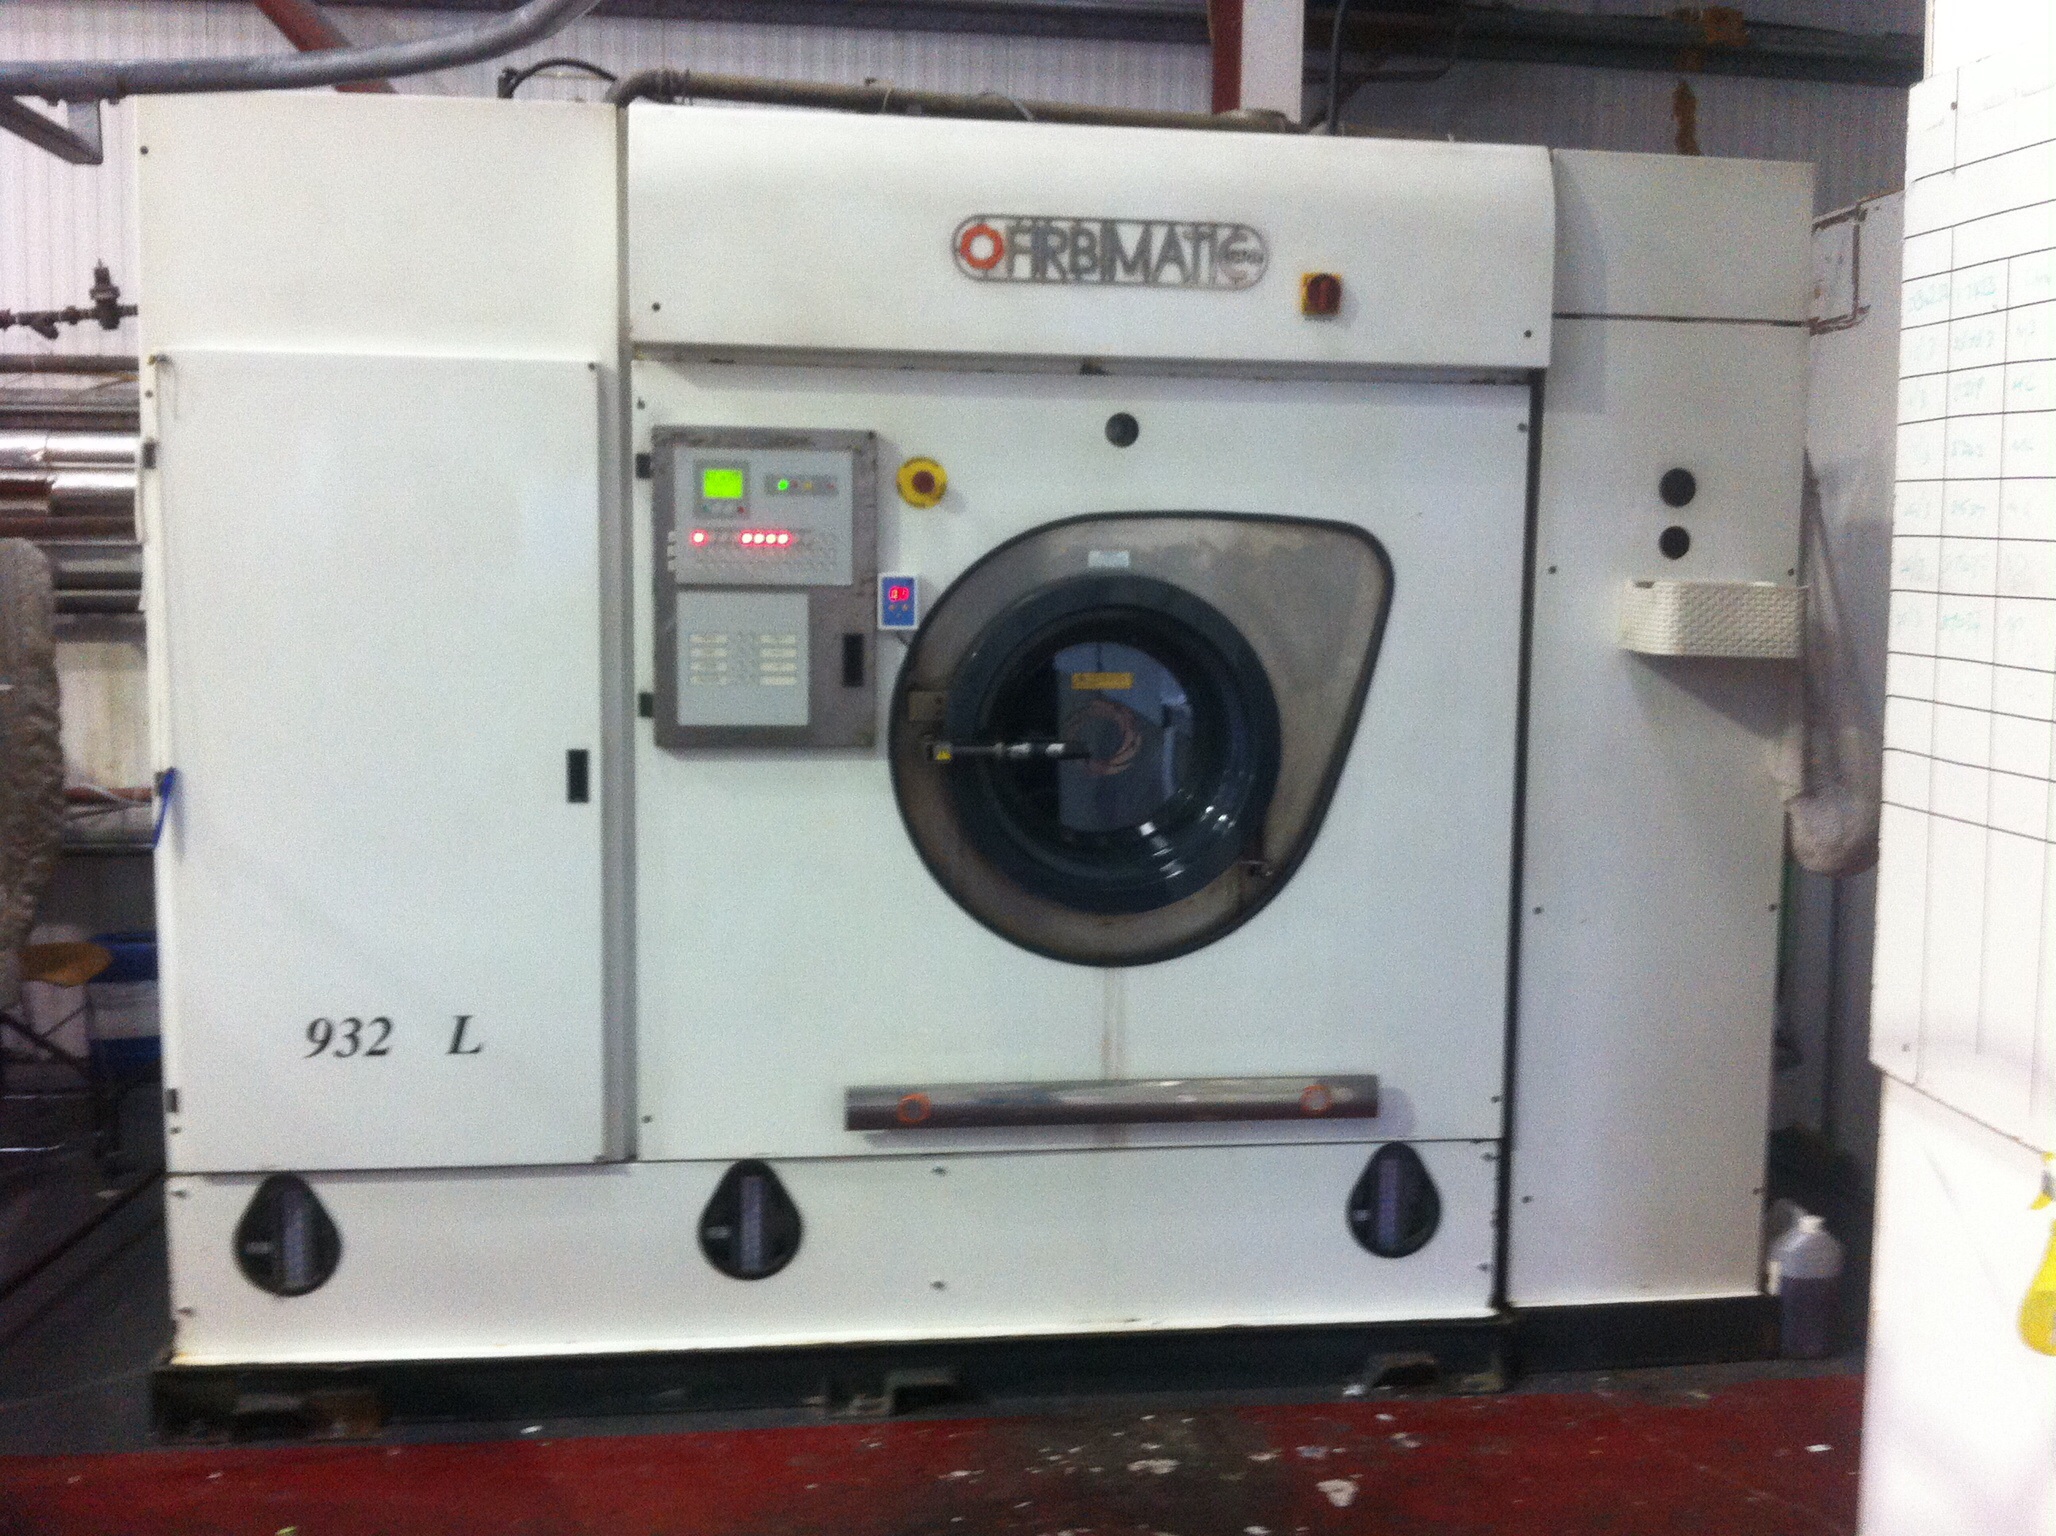 L932 fibirmatic drycleaning machine